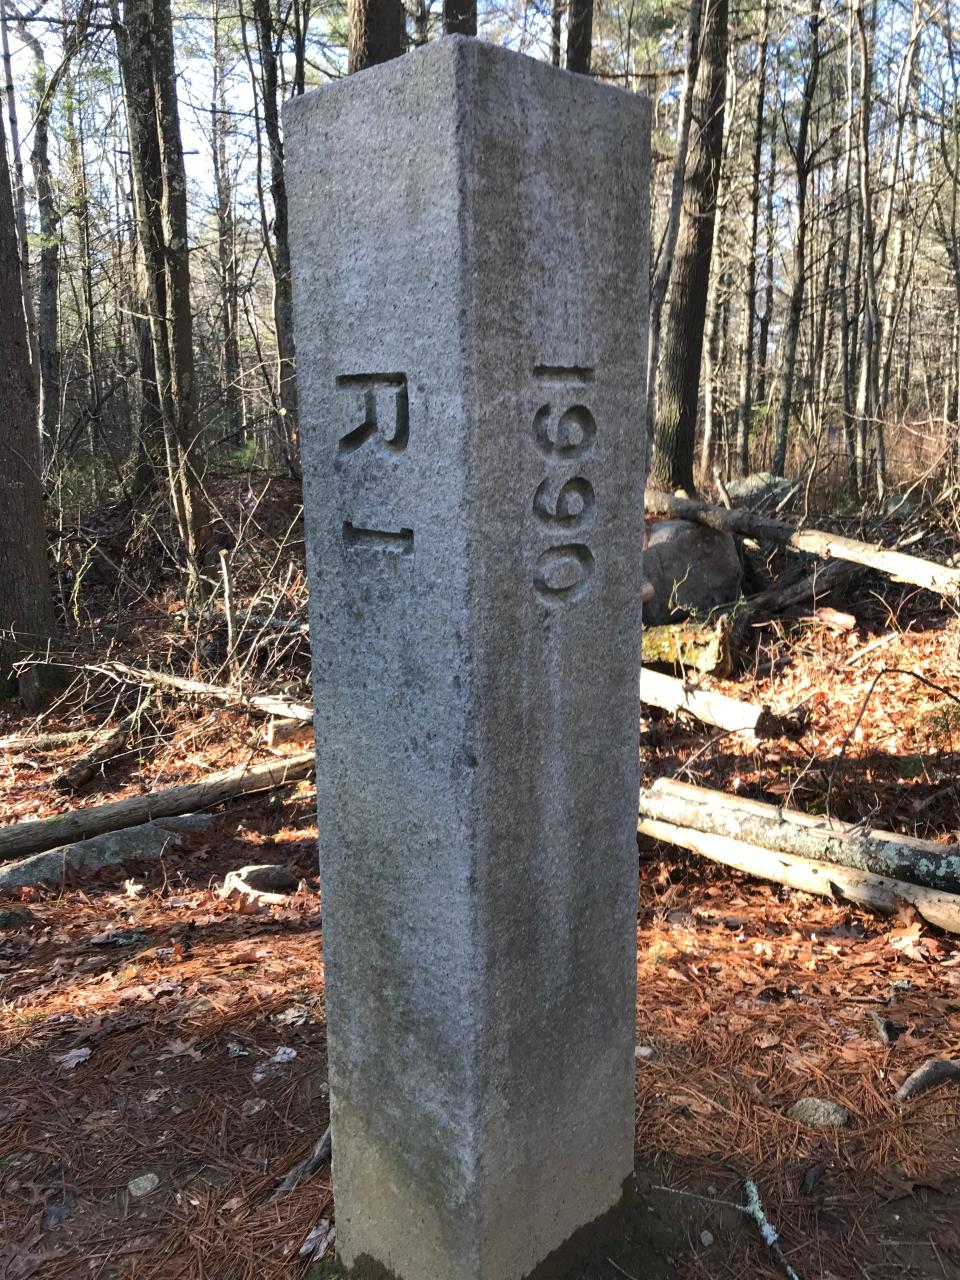 A 5-foot-tall stone pillar marks the trailhead at the Rhode Island/Connecticut border.